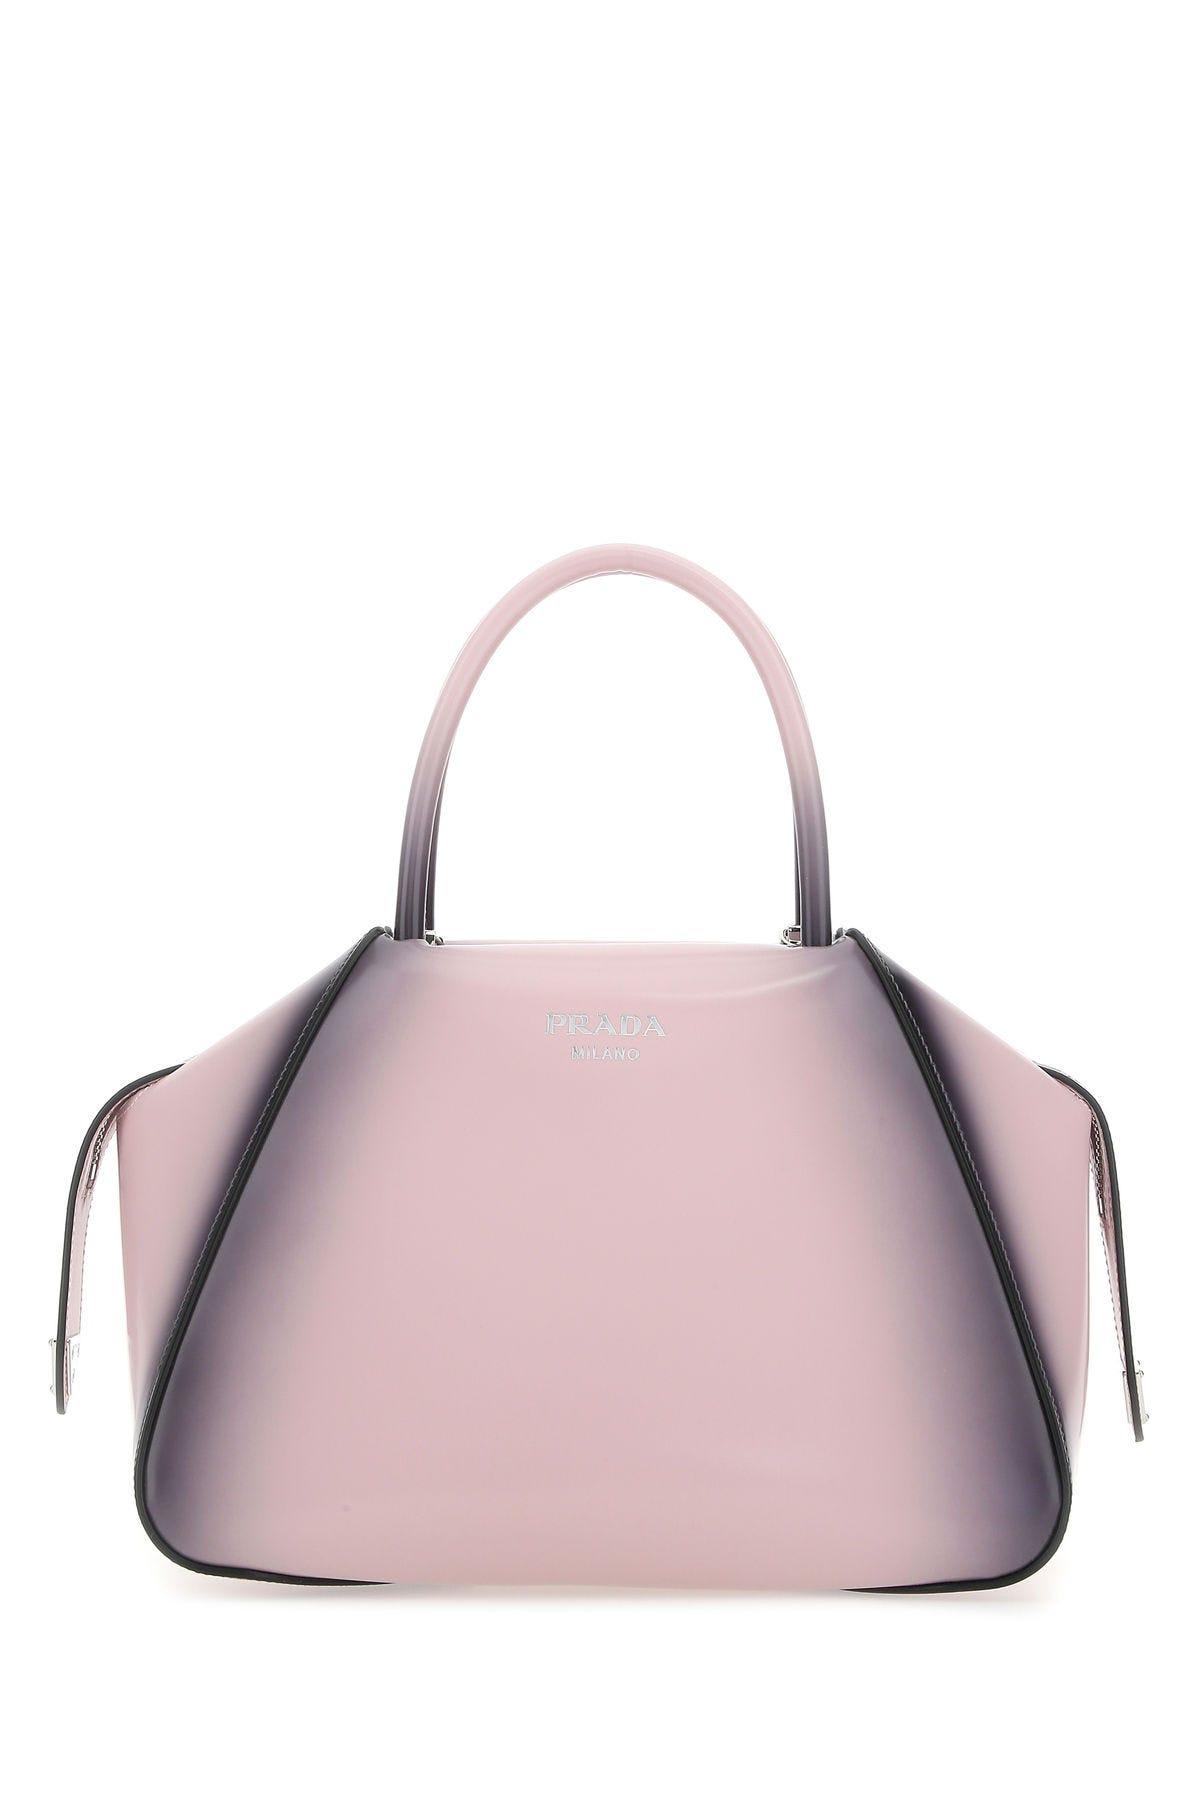 Prada Two-tone Leather Handbag